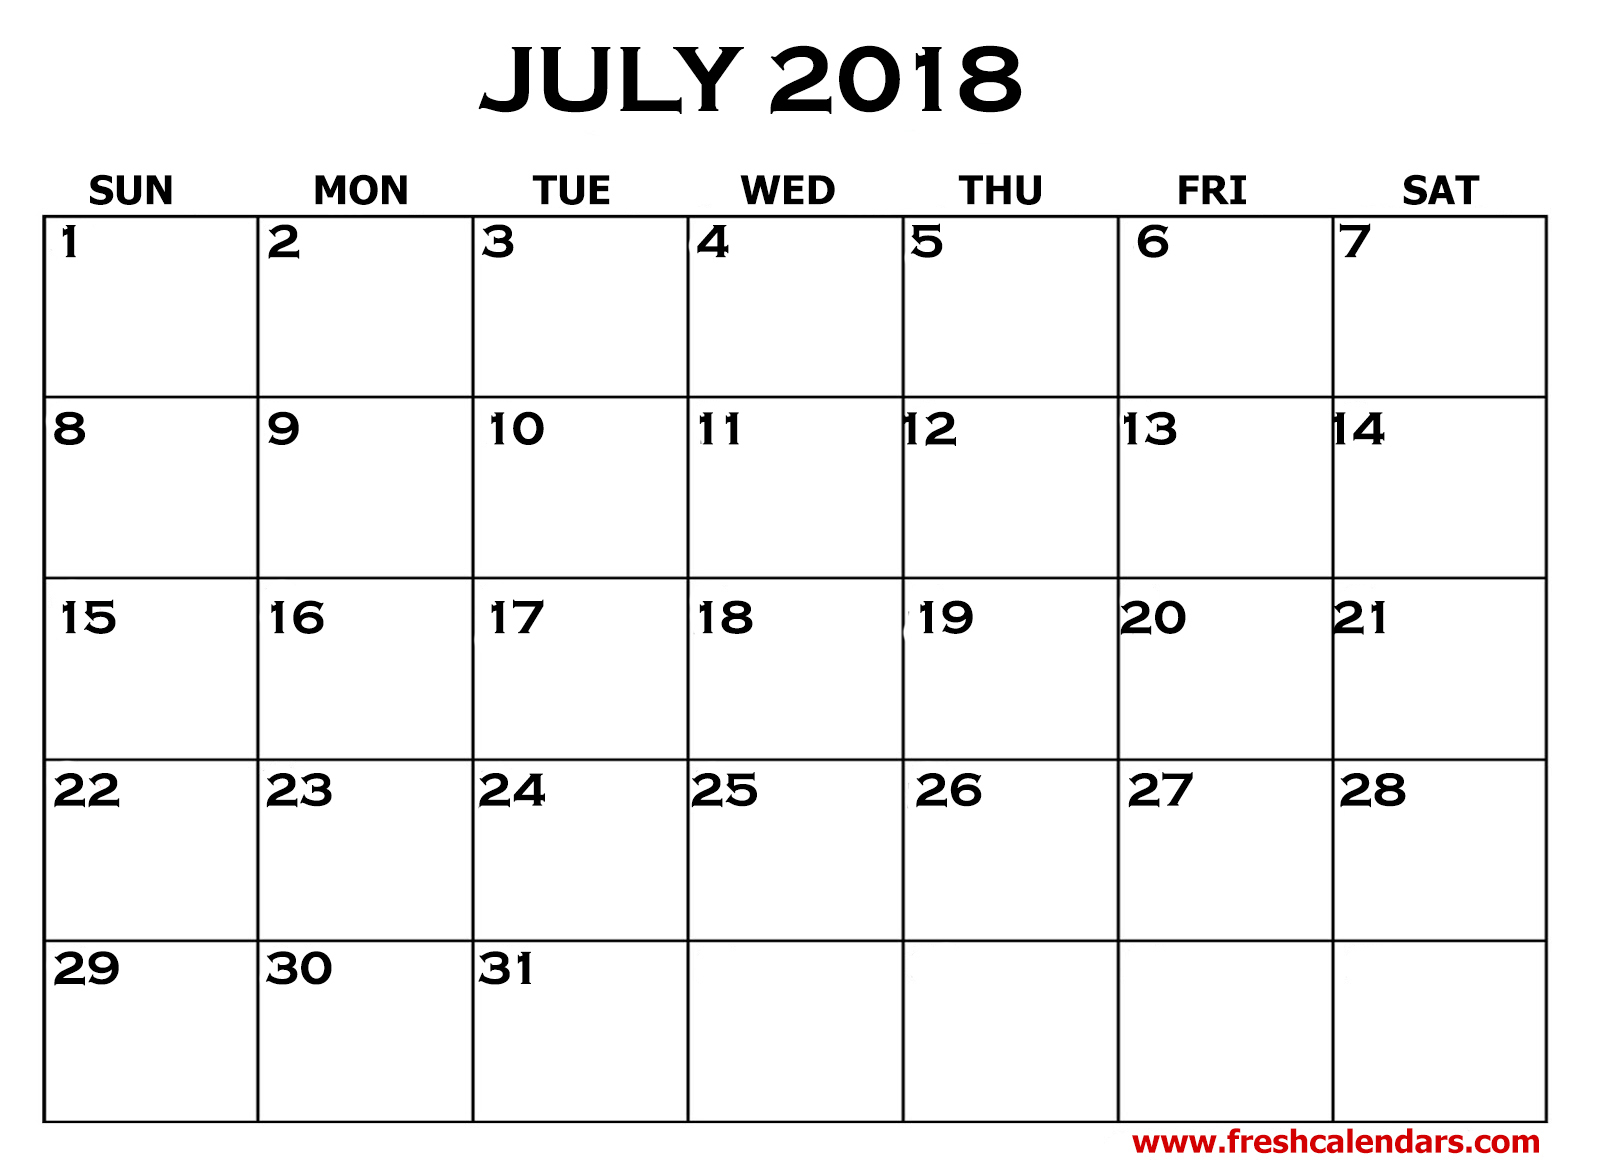 July 2018 Calendars